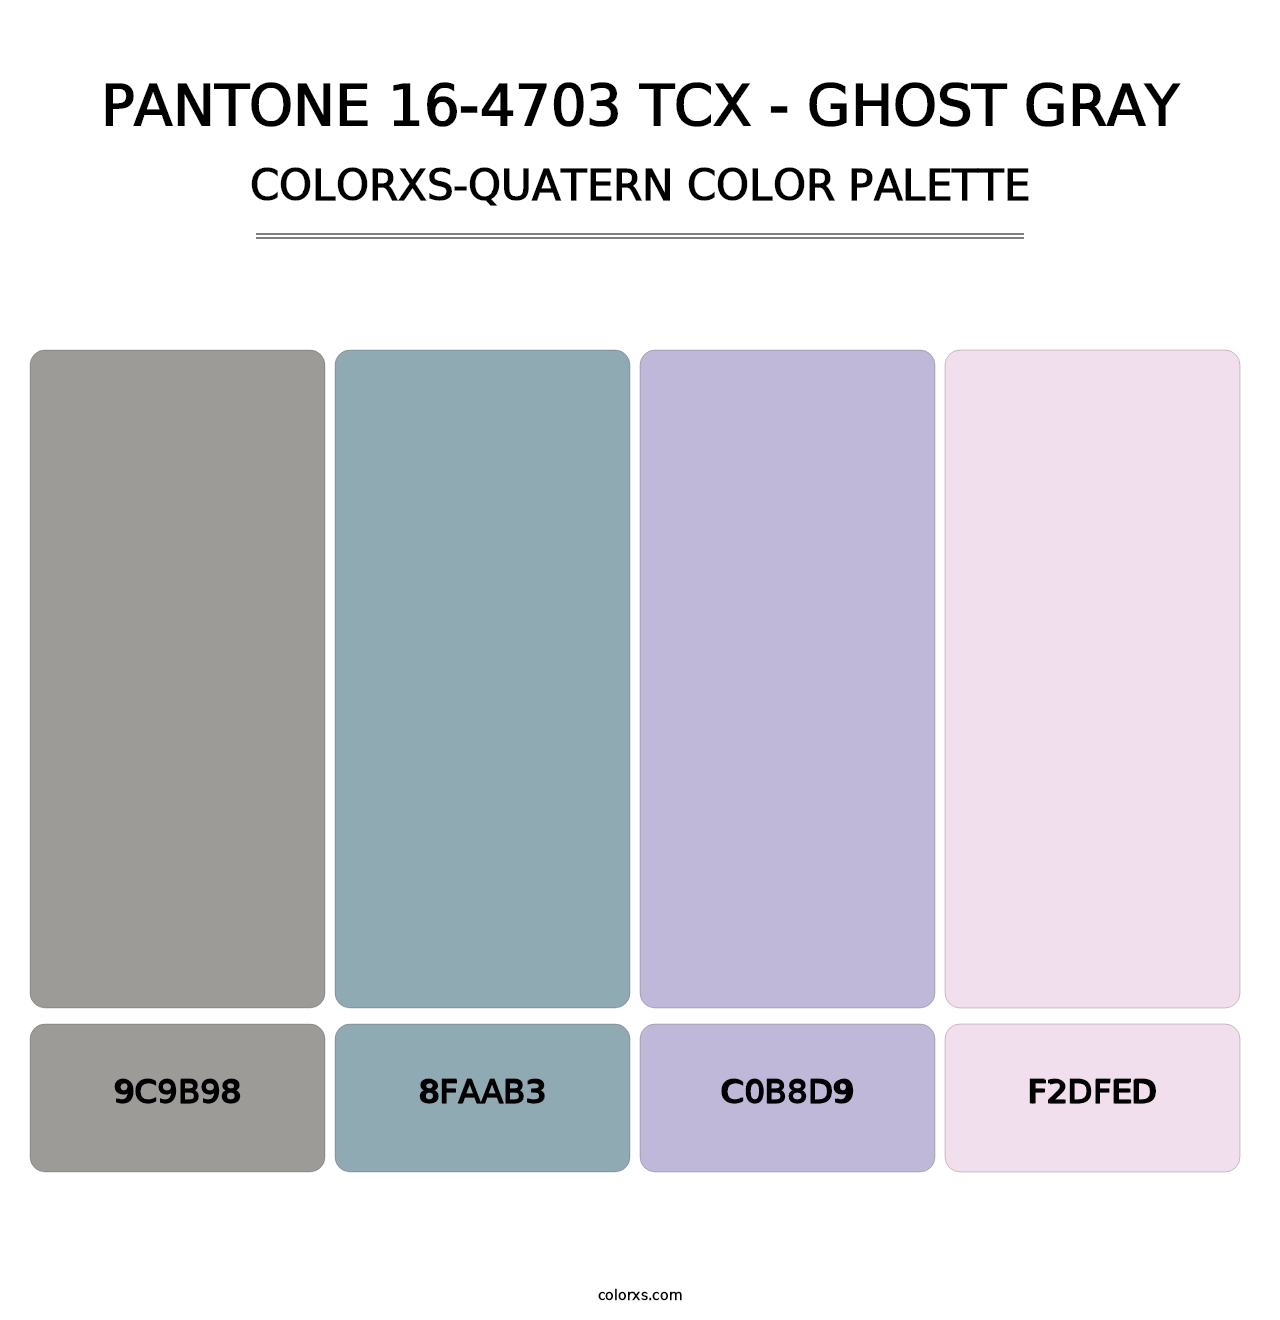 PANTONE 16-4703 TCX - Ghost Gray - Colorxs Quatern Palette